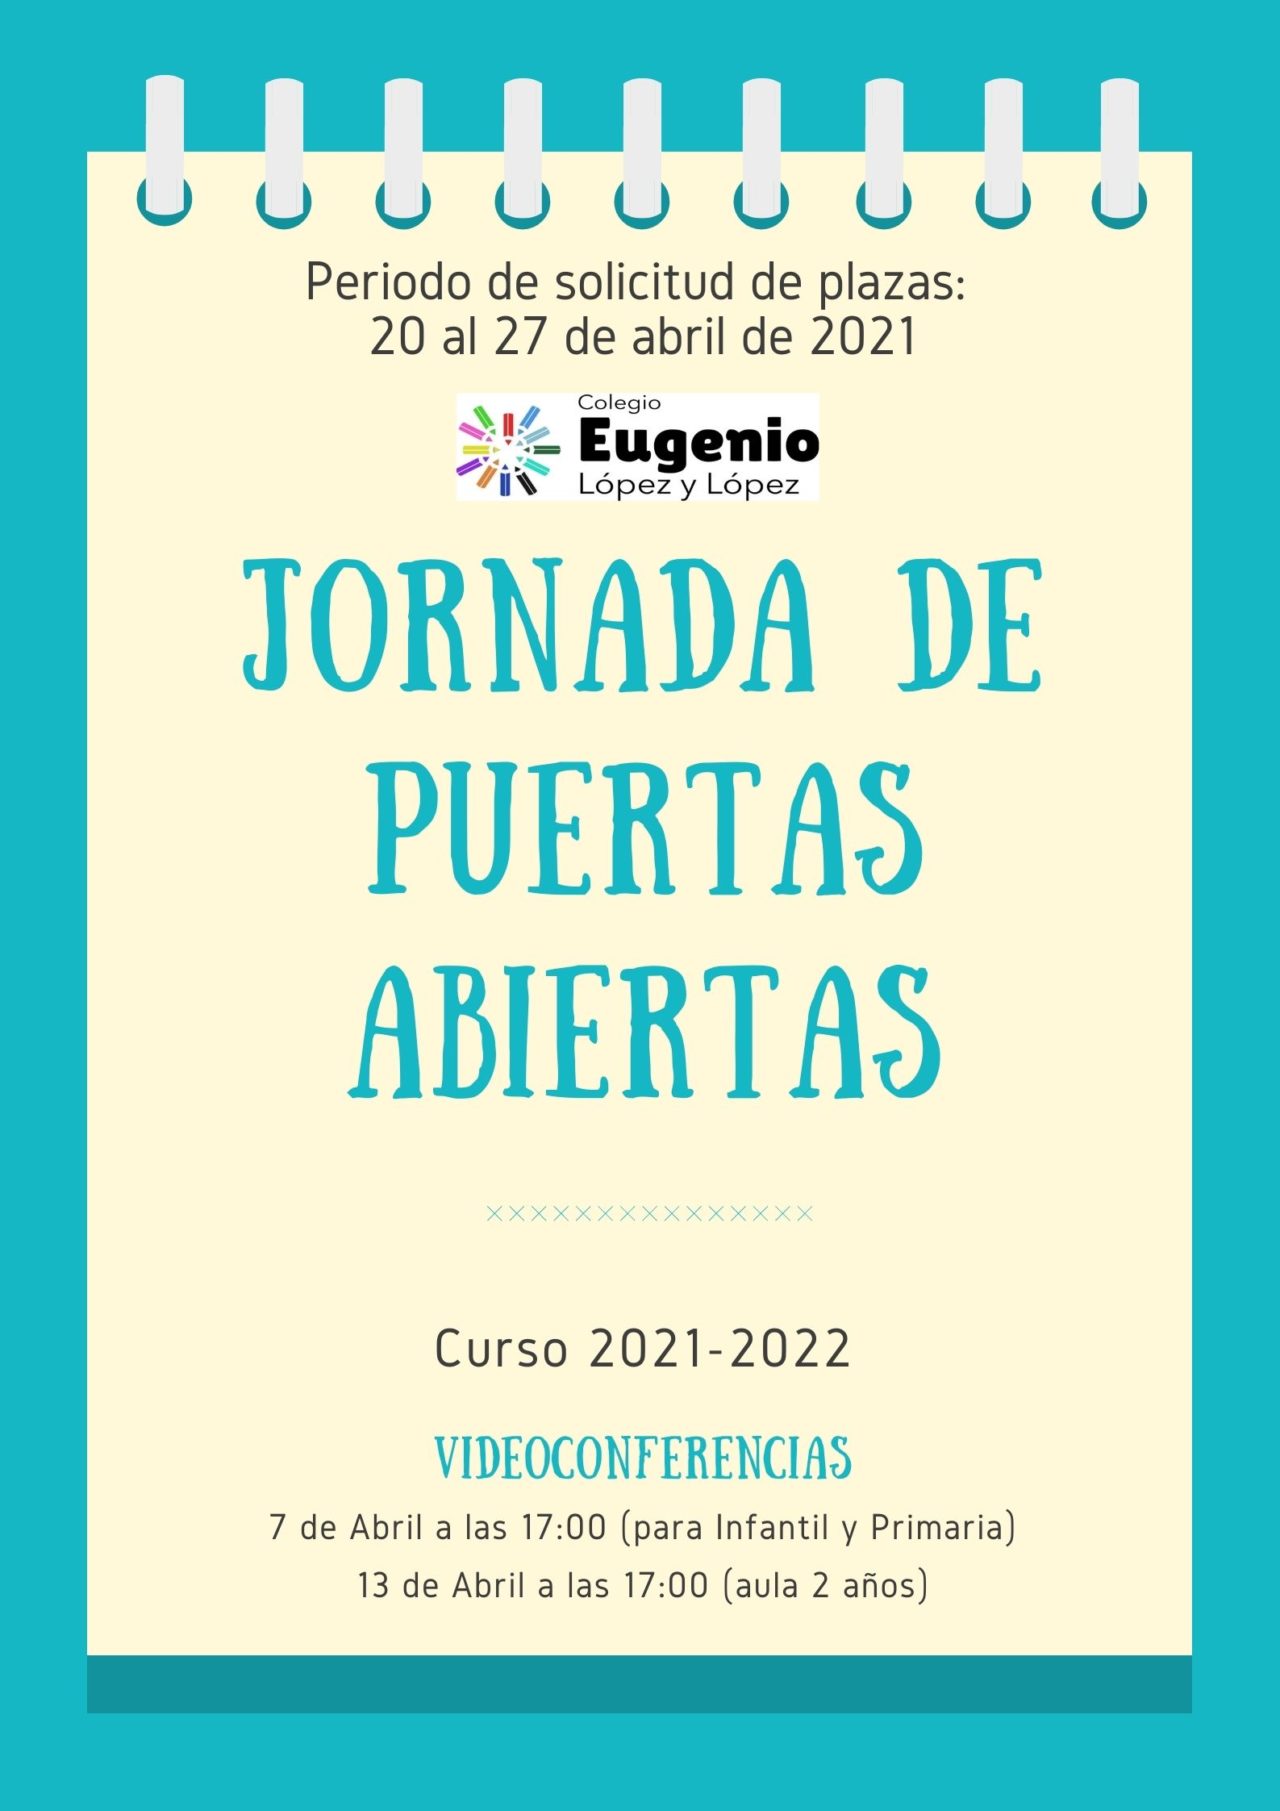 http://colegioeugeniolopezylopez.es/wp-content/uploads/2021/03/Jornada-de-Puertas-Abiertas-1-1280x1811.jpg